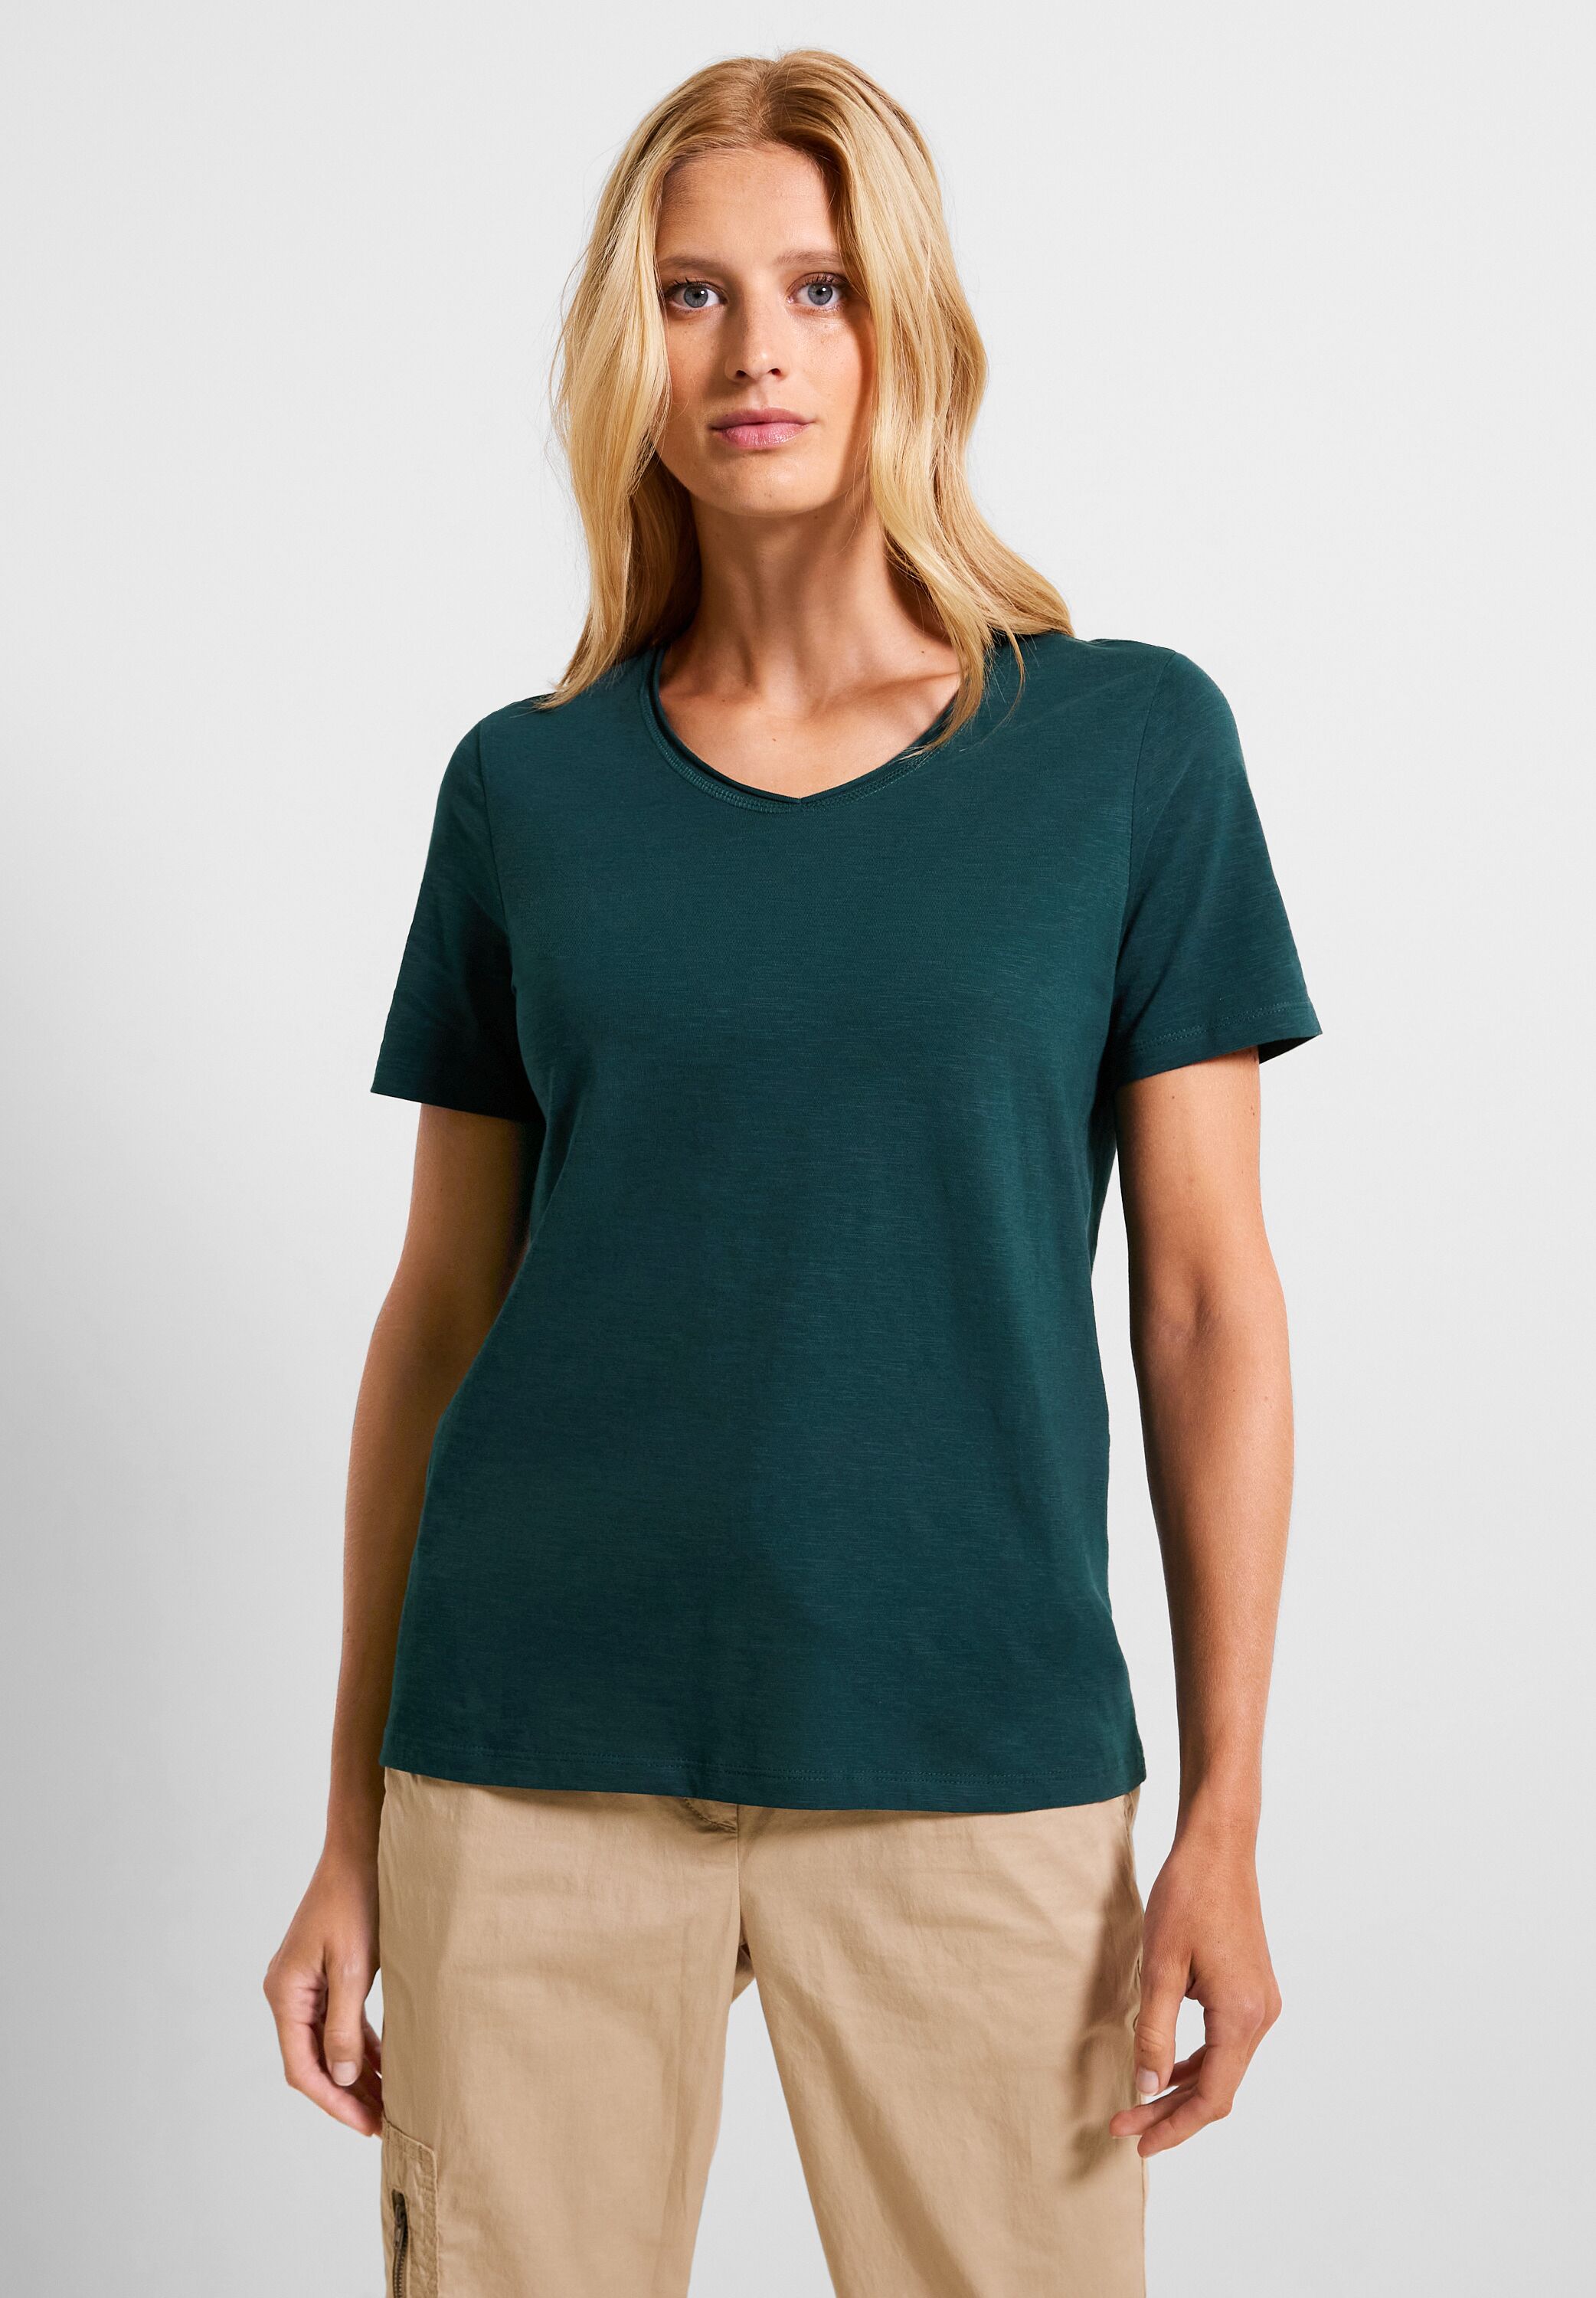 Lake B319372-14926 CONCEPT SALE CECIL im Deep - in Green Mode T-Shirt reduziert